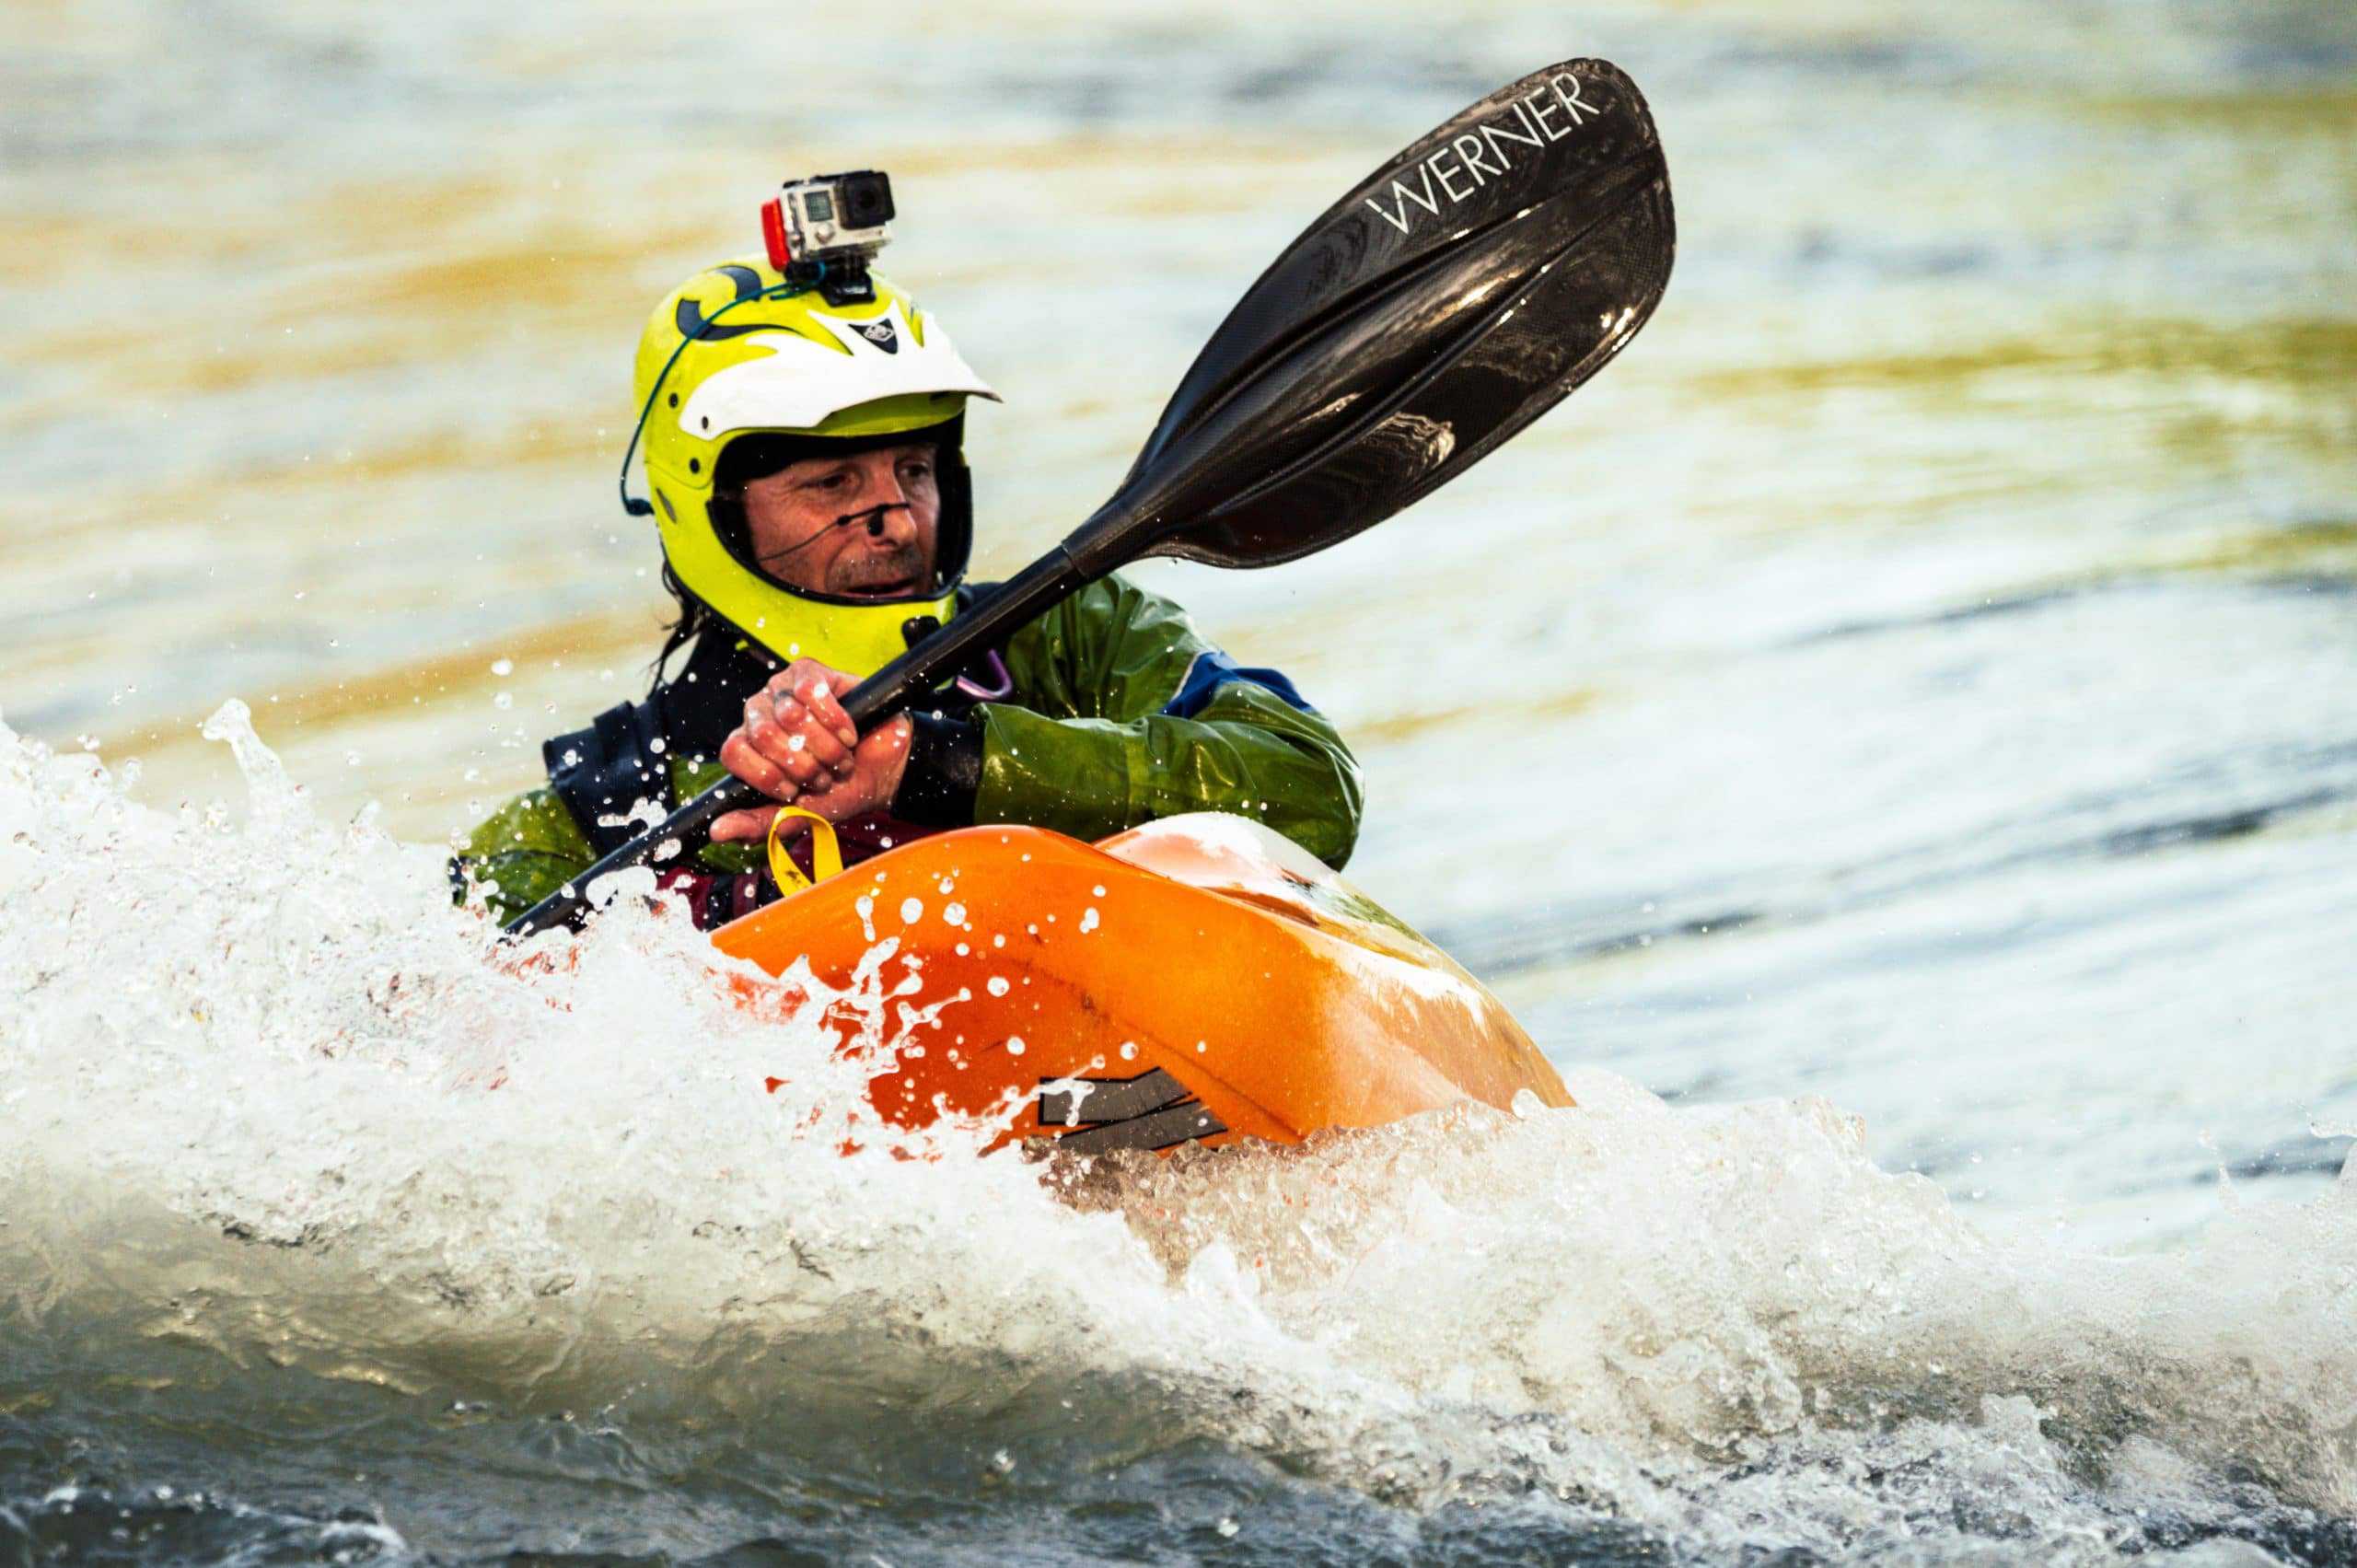 best pfd for kayaking